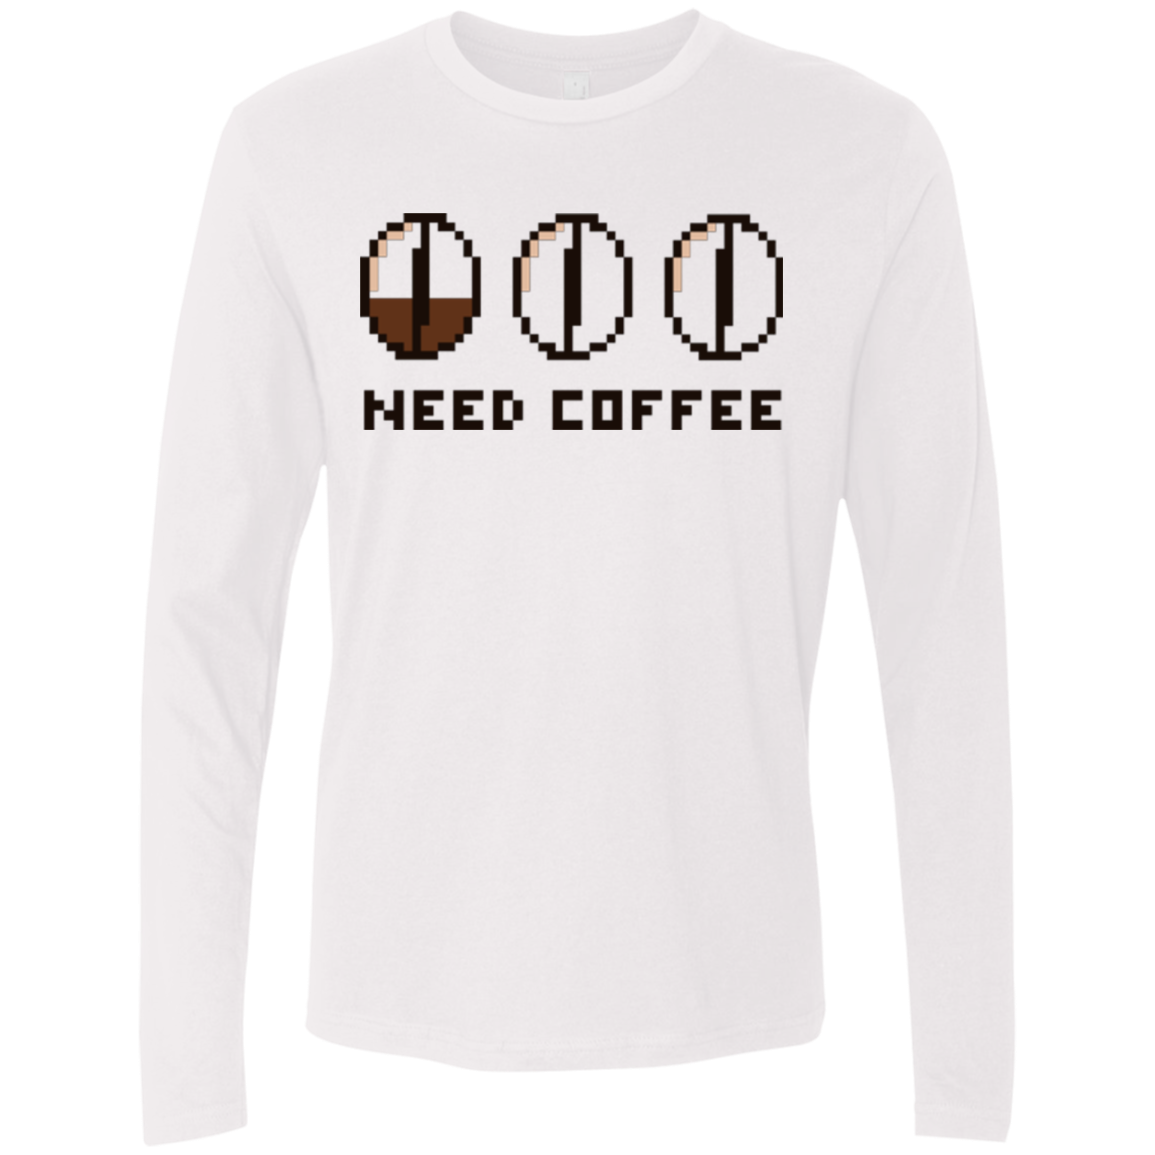 Need Coffee Men's Premium Long Sleeve